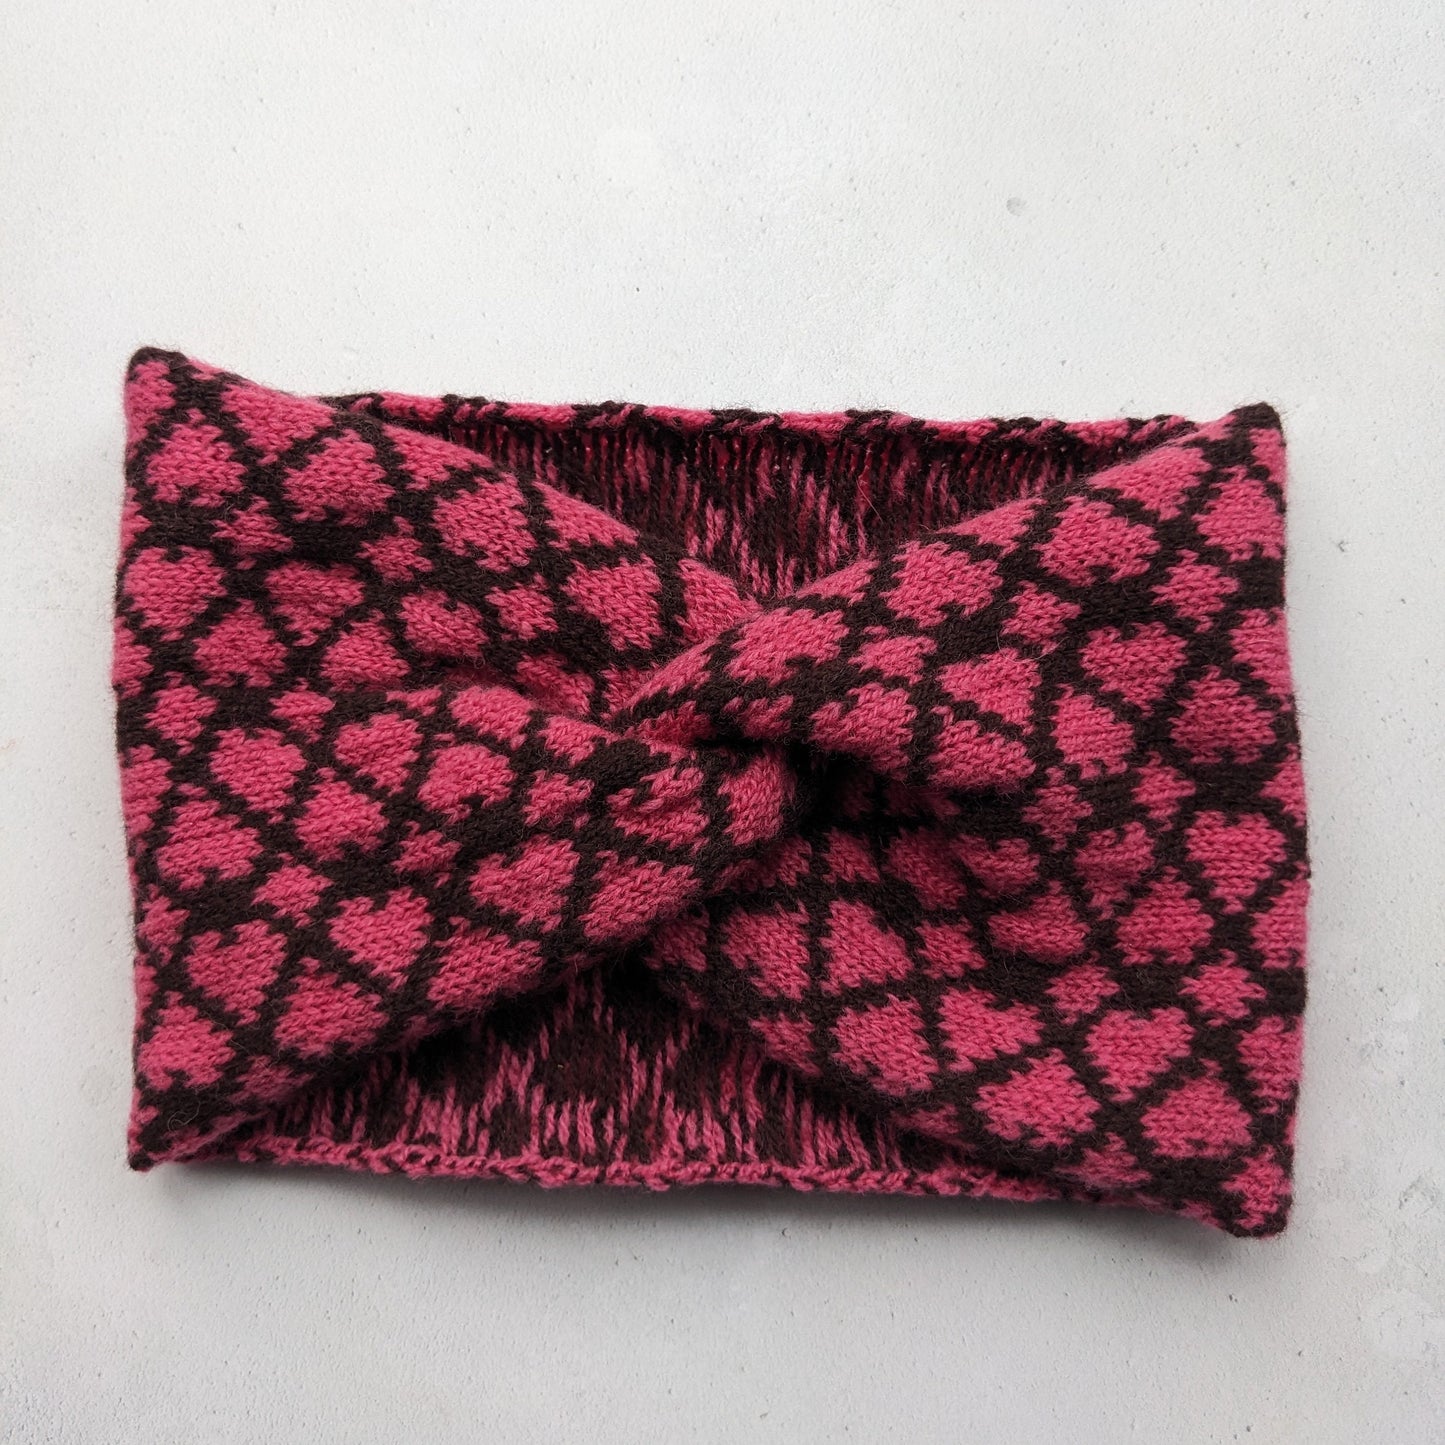 Merino wool ear warmer knitted headband chocolate brown with pink hearts